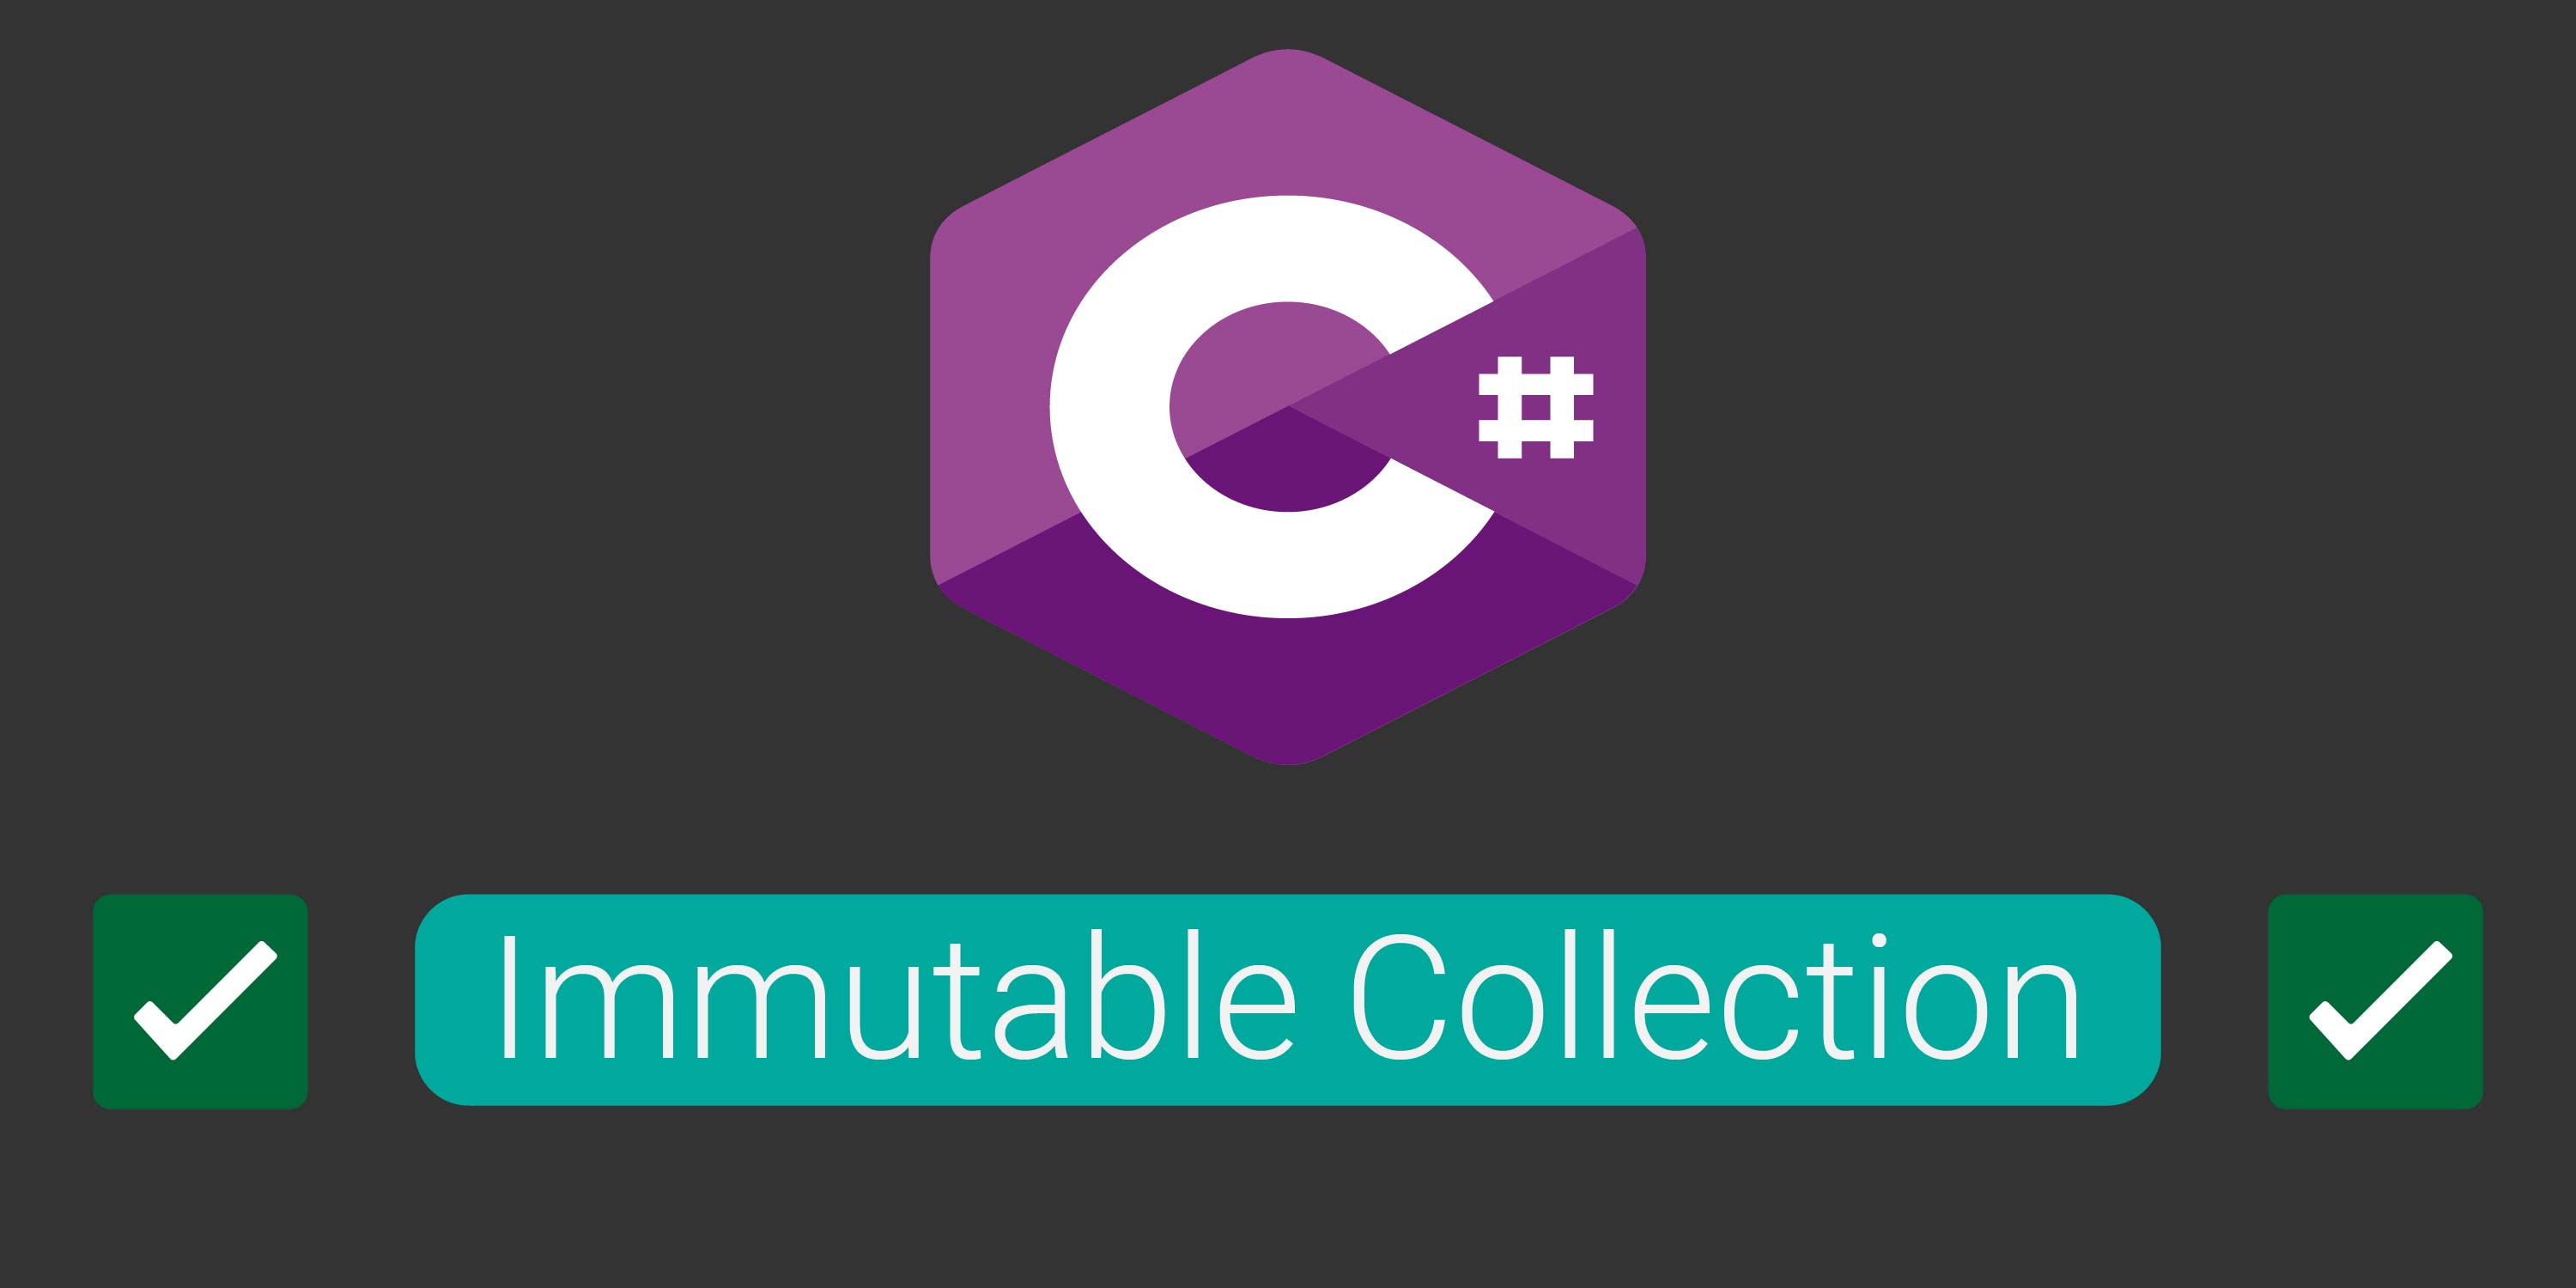 Immutable Collectionها در سیشارپ